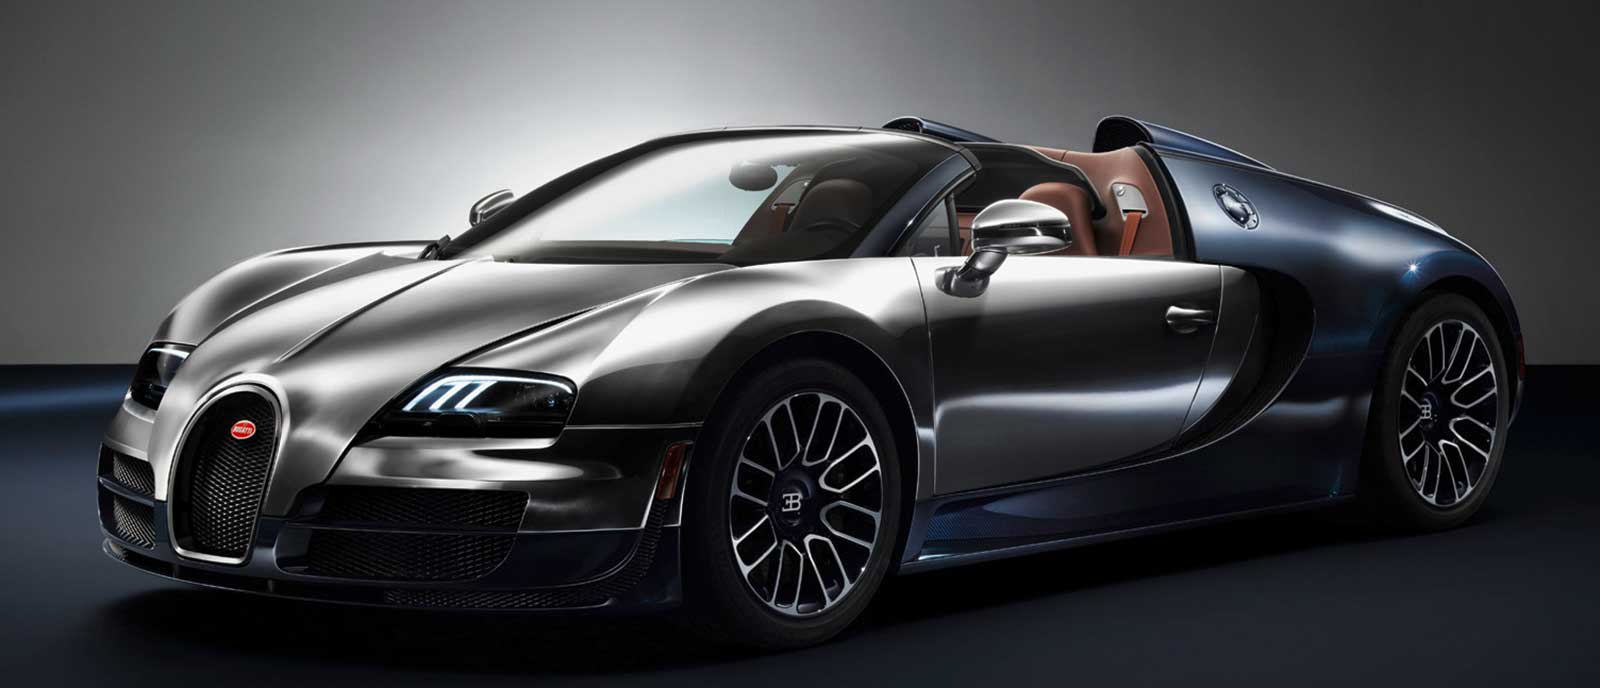 Bugatti, 2014-Bugatti-Veyron-Ettore-Bugatti-Edition-Roadsters: Nama “Ettore Bugatti” Digunakan Sebagai Nama Terakhir Bugatti Veyron